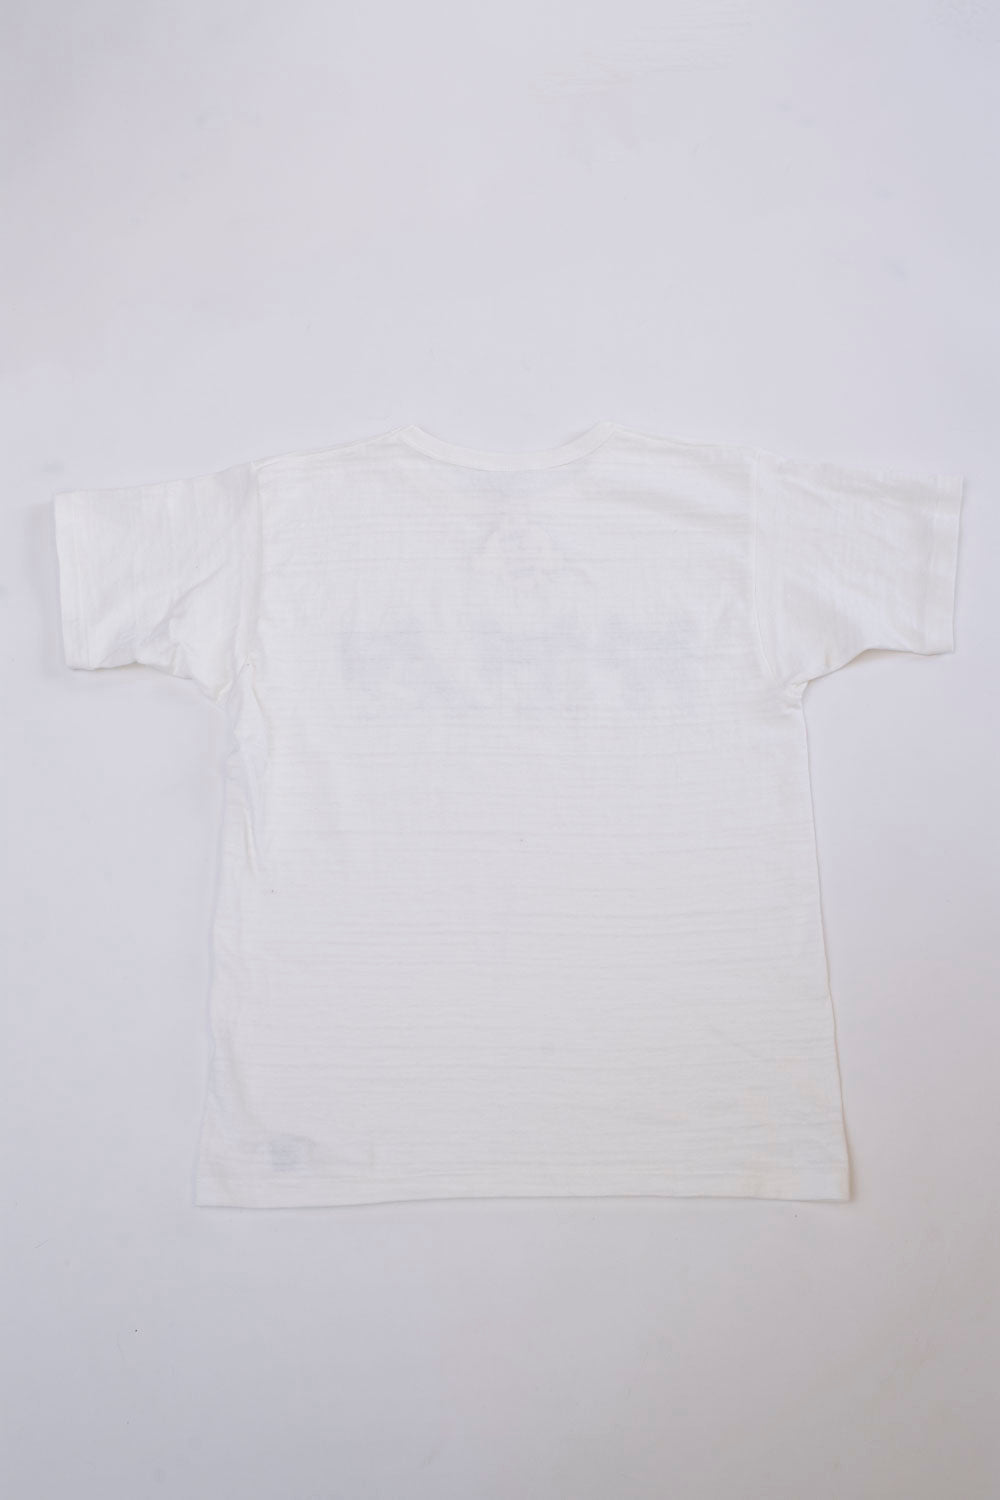 Lot JG-CS06 - Kung Fu Fighting T-Shirt - Off White